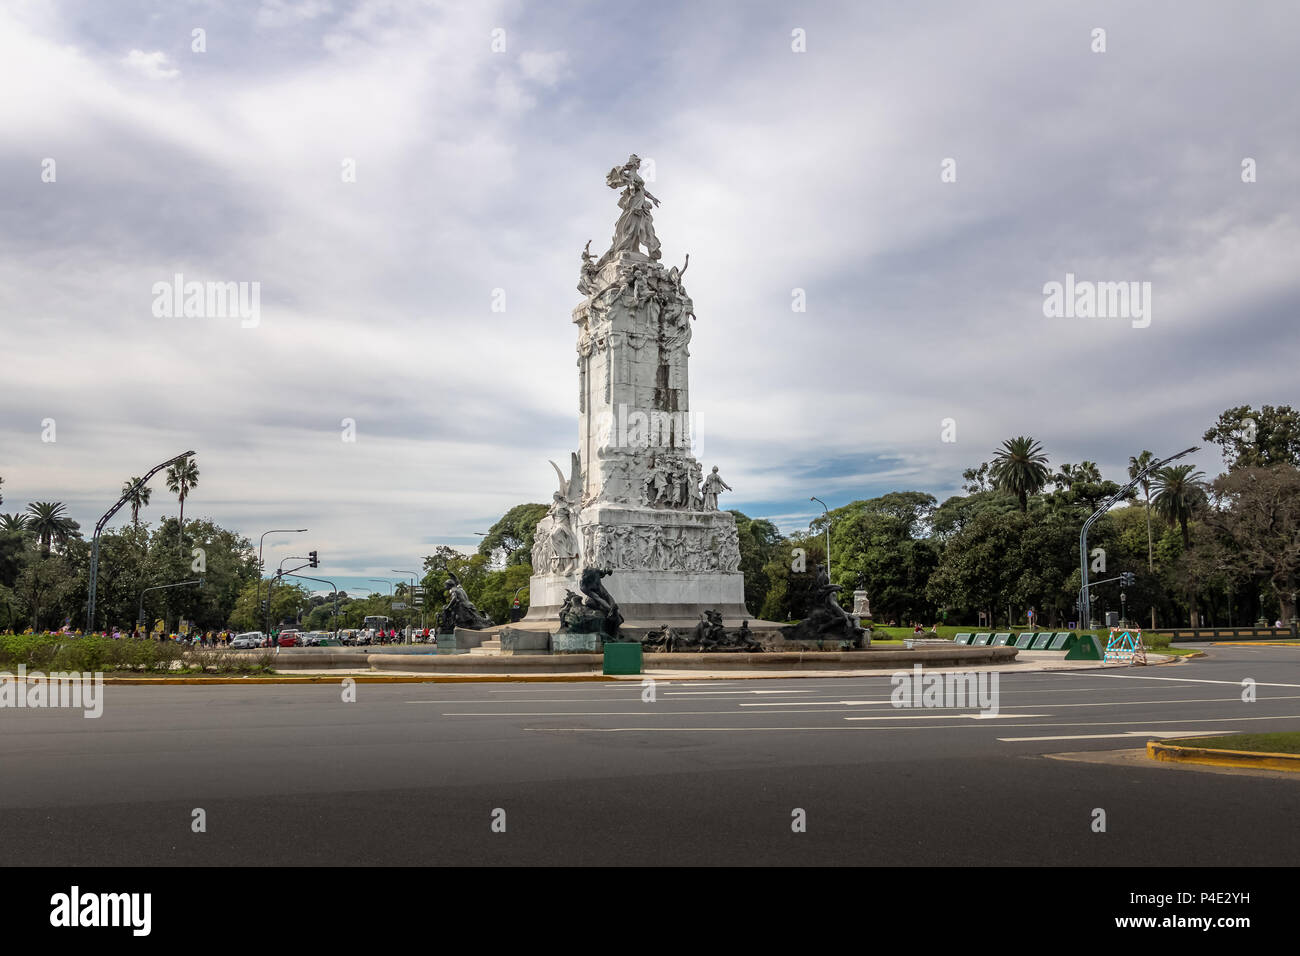 Monument to the Spaniards (Monumento de los Espanoles) in Palermo - Buenos Aires, Argentina Stock Photo